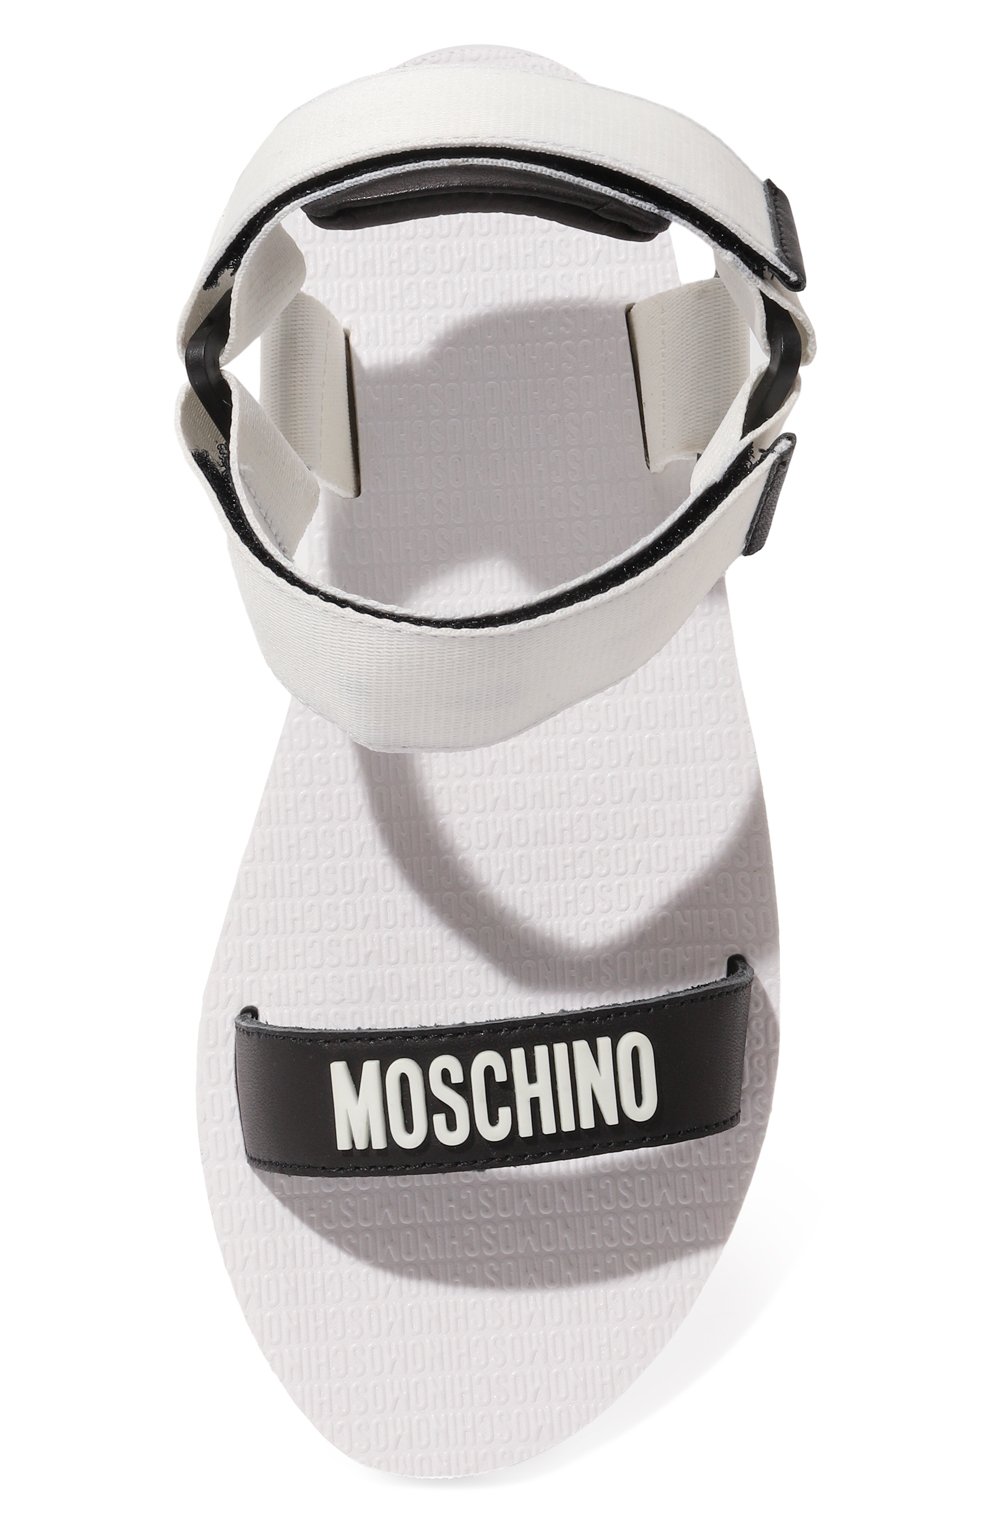 Комбинированные сандалии Moschino MA16658I1G/MV1, цвет чёрно-белый, размер 41 MA16658I1G/MV1 - фото 5